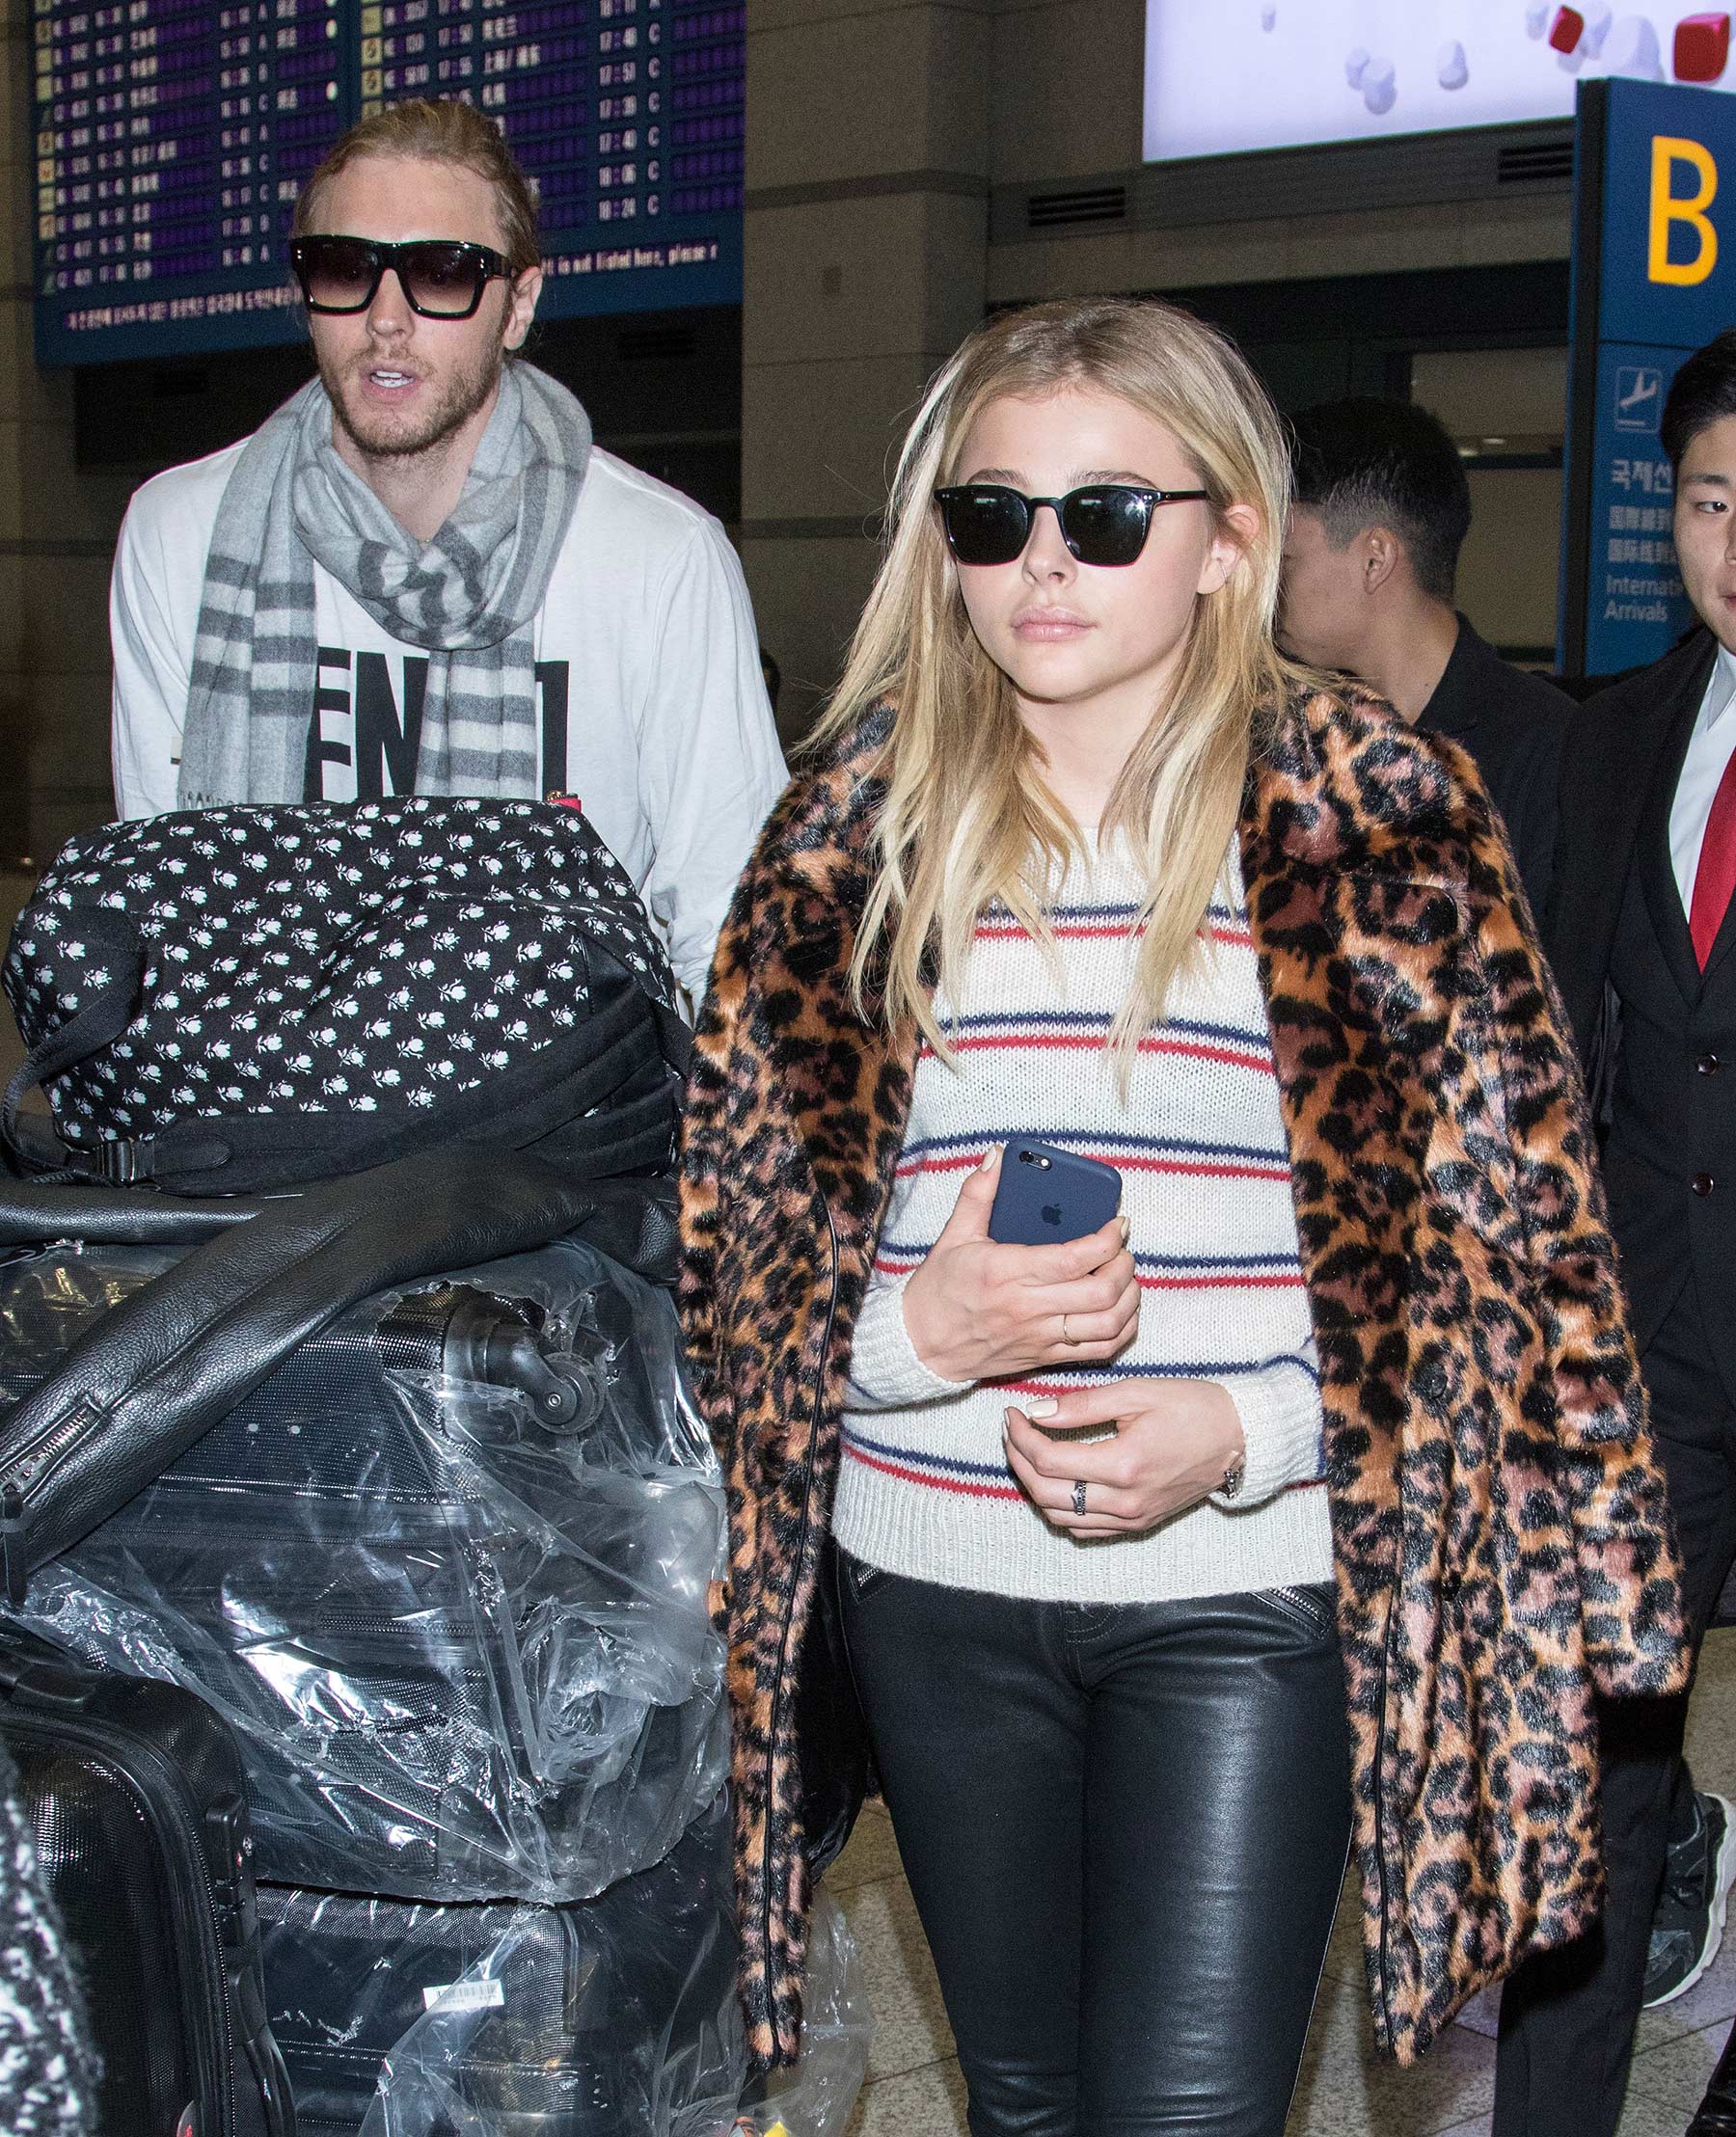 Chloe Moretz arriving at Incheon Airport in Seoul